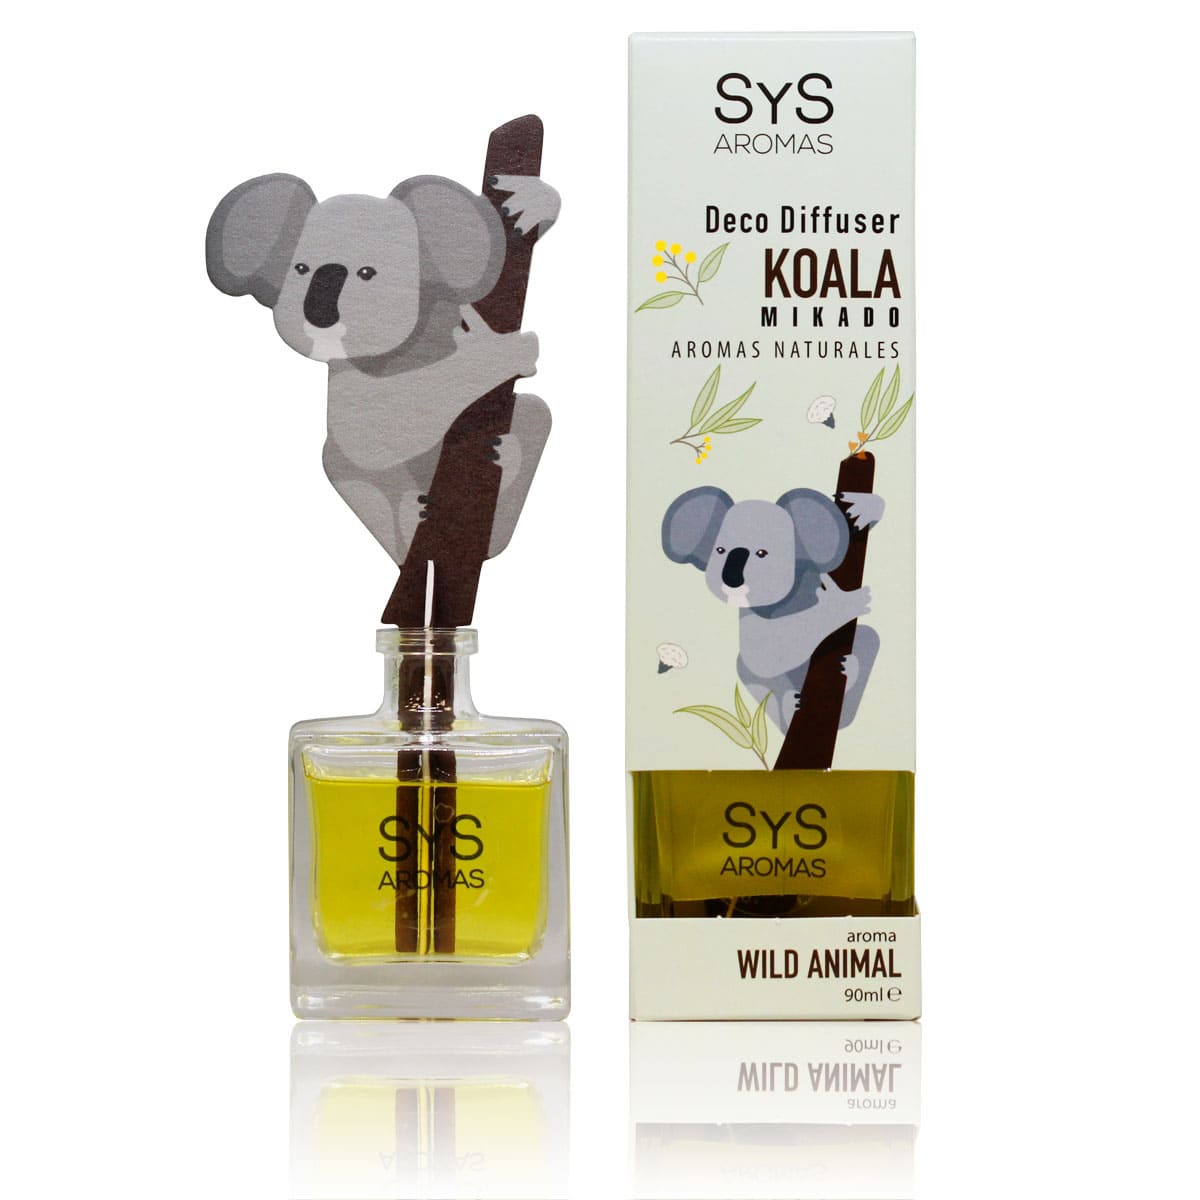 Buy Koala Diffuser Air freshener 90ml SYS Aromas